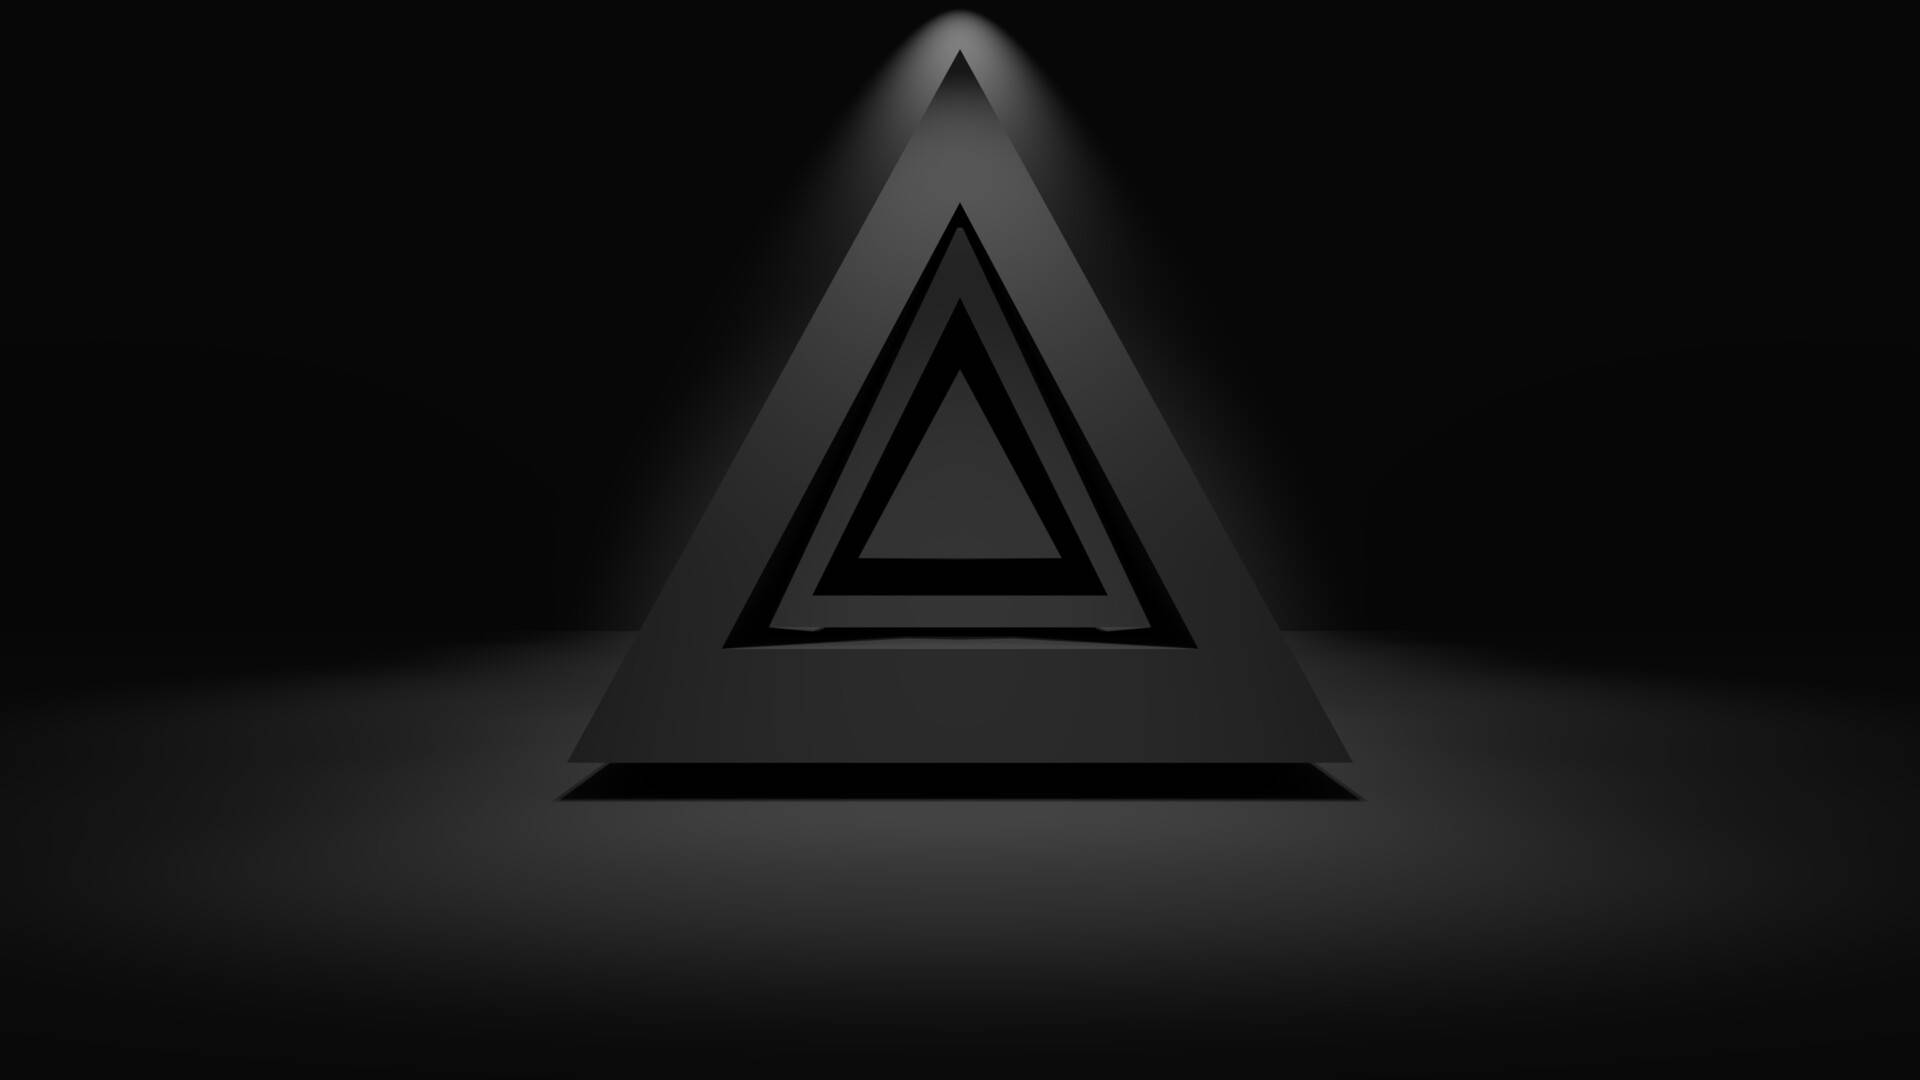 Black Pyramid Aesthetic